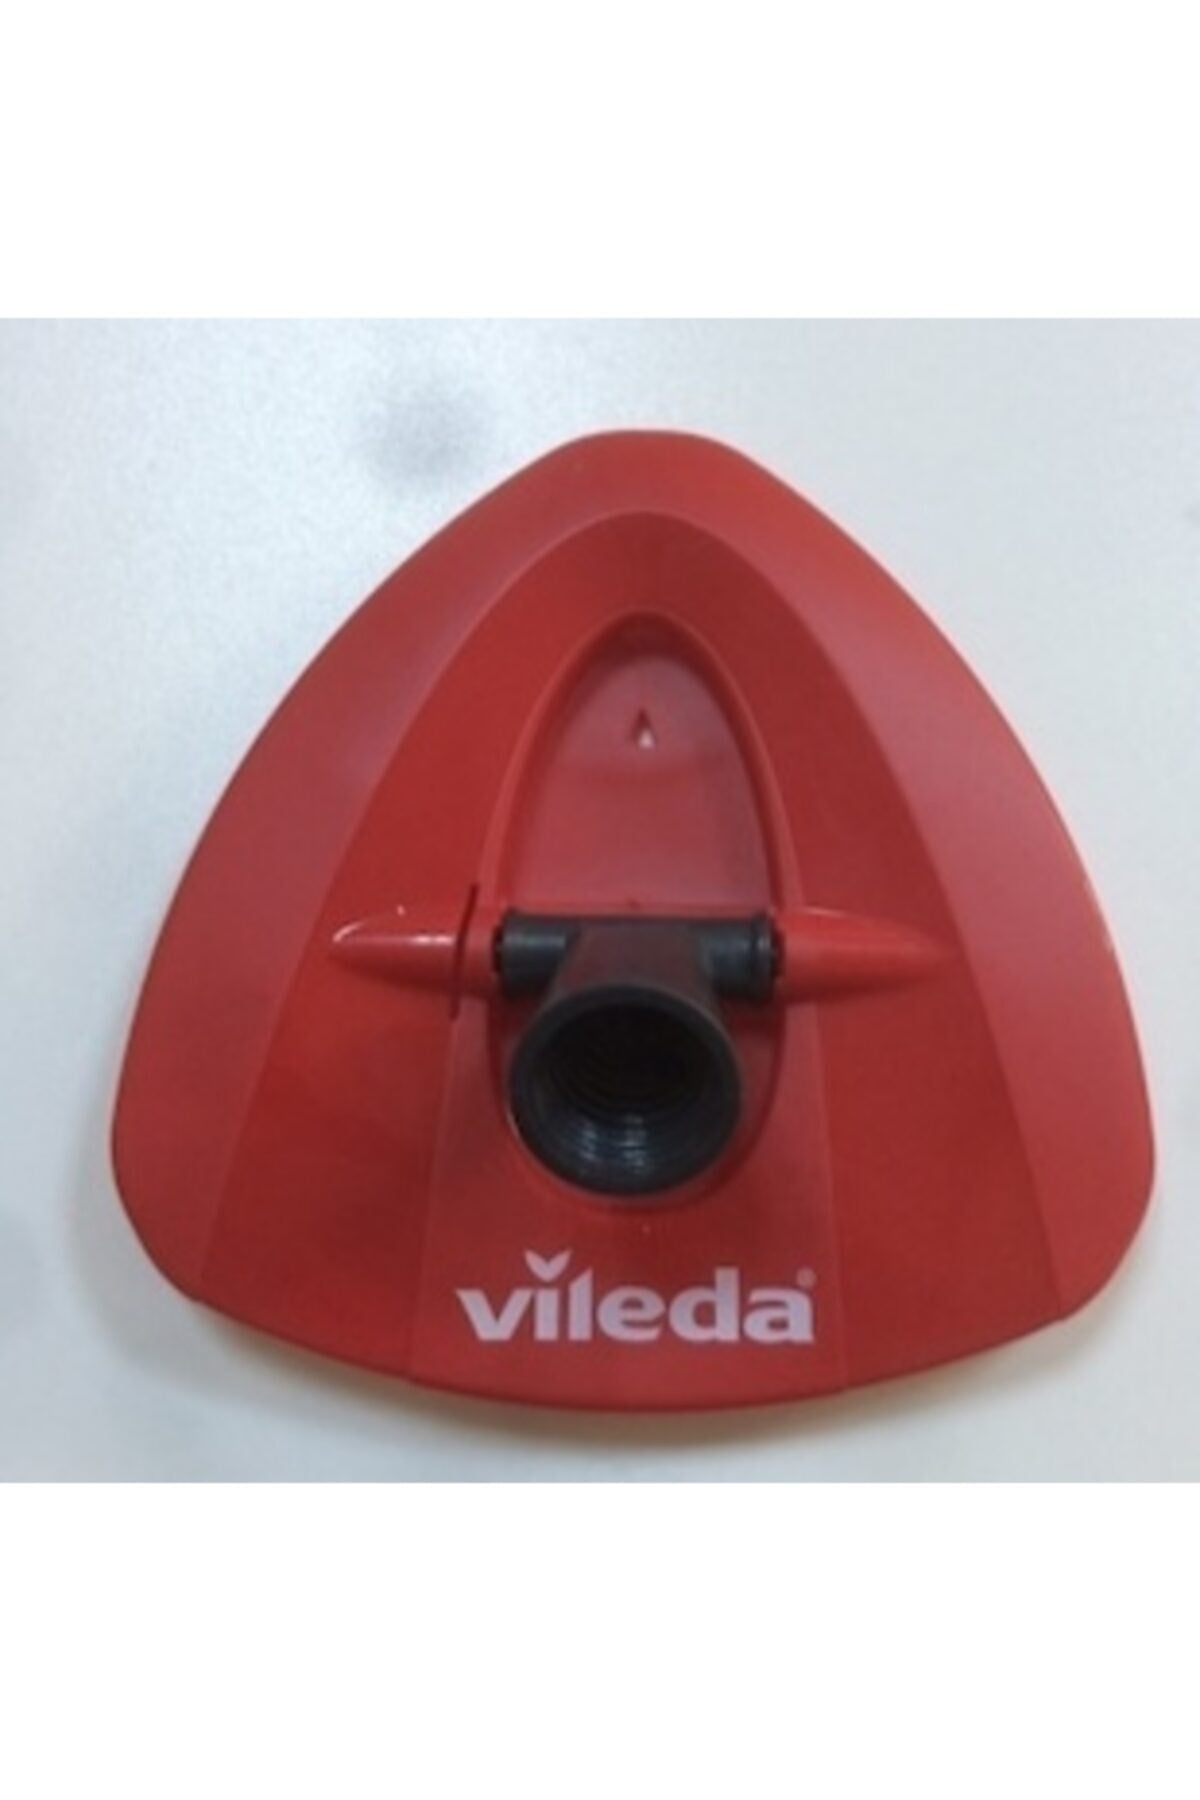 Vileda Turbo Triangular Bucket Rod Attachment Staff Handle Spare Part Accessory